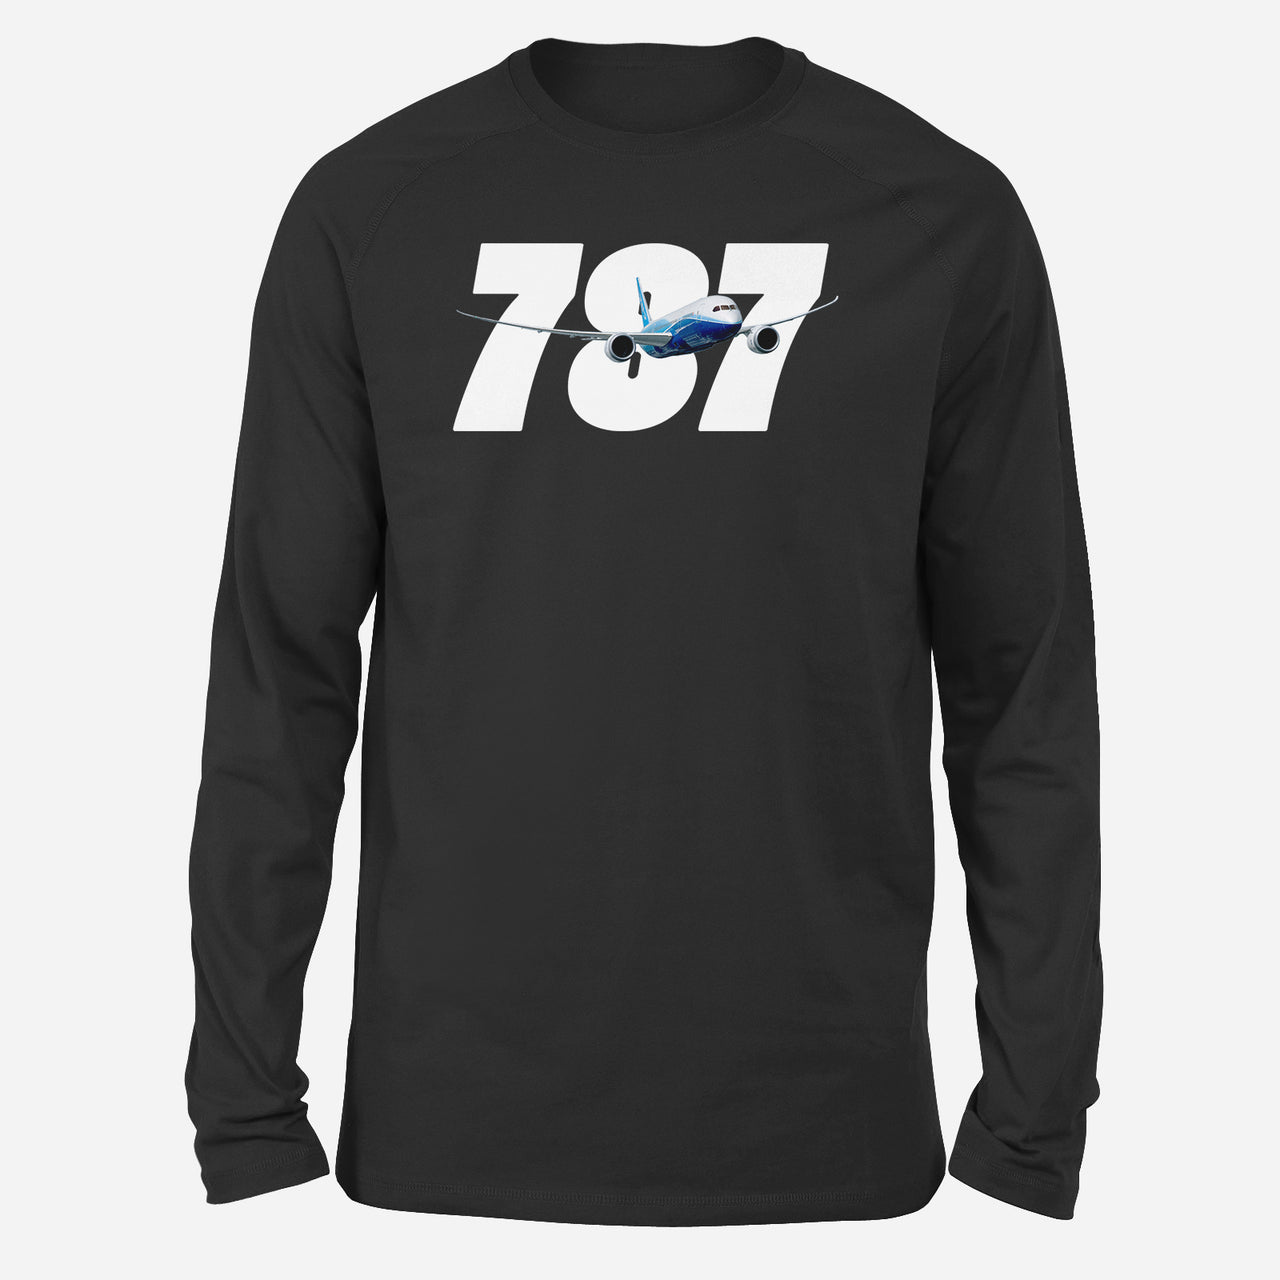 Super Boeing 787 Designed Long-Sleeve T-Shirts